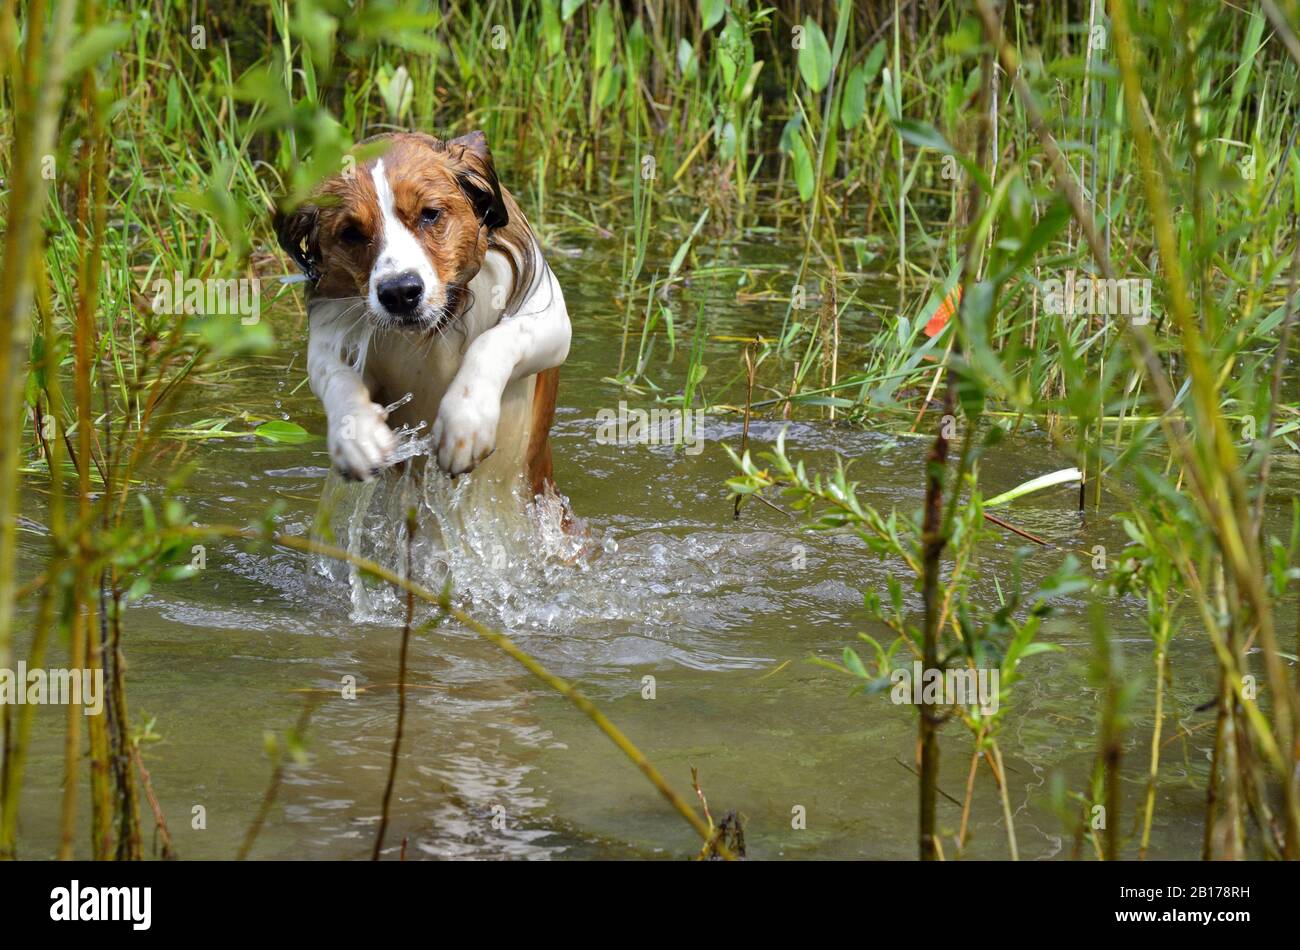 Small Dutch Waterfowl Dog, Kooiker (Canis lupus f. familiaris), Kooikerhondje jumping through a pond, Germany, North Rhine-Westphalia Stock Photo